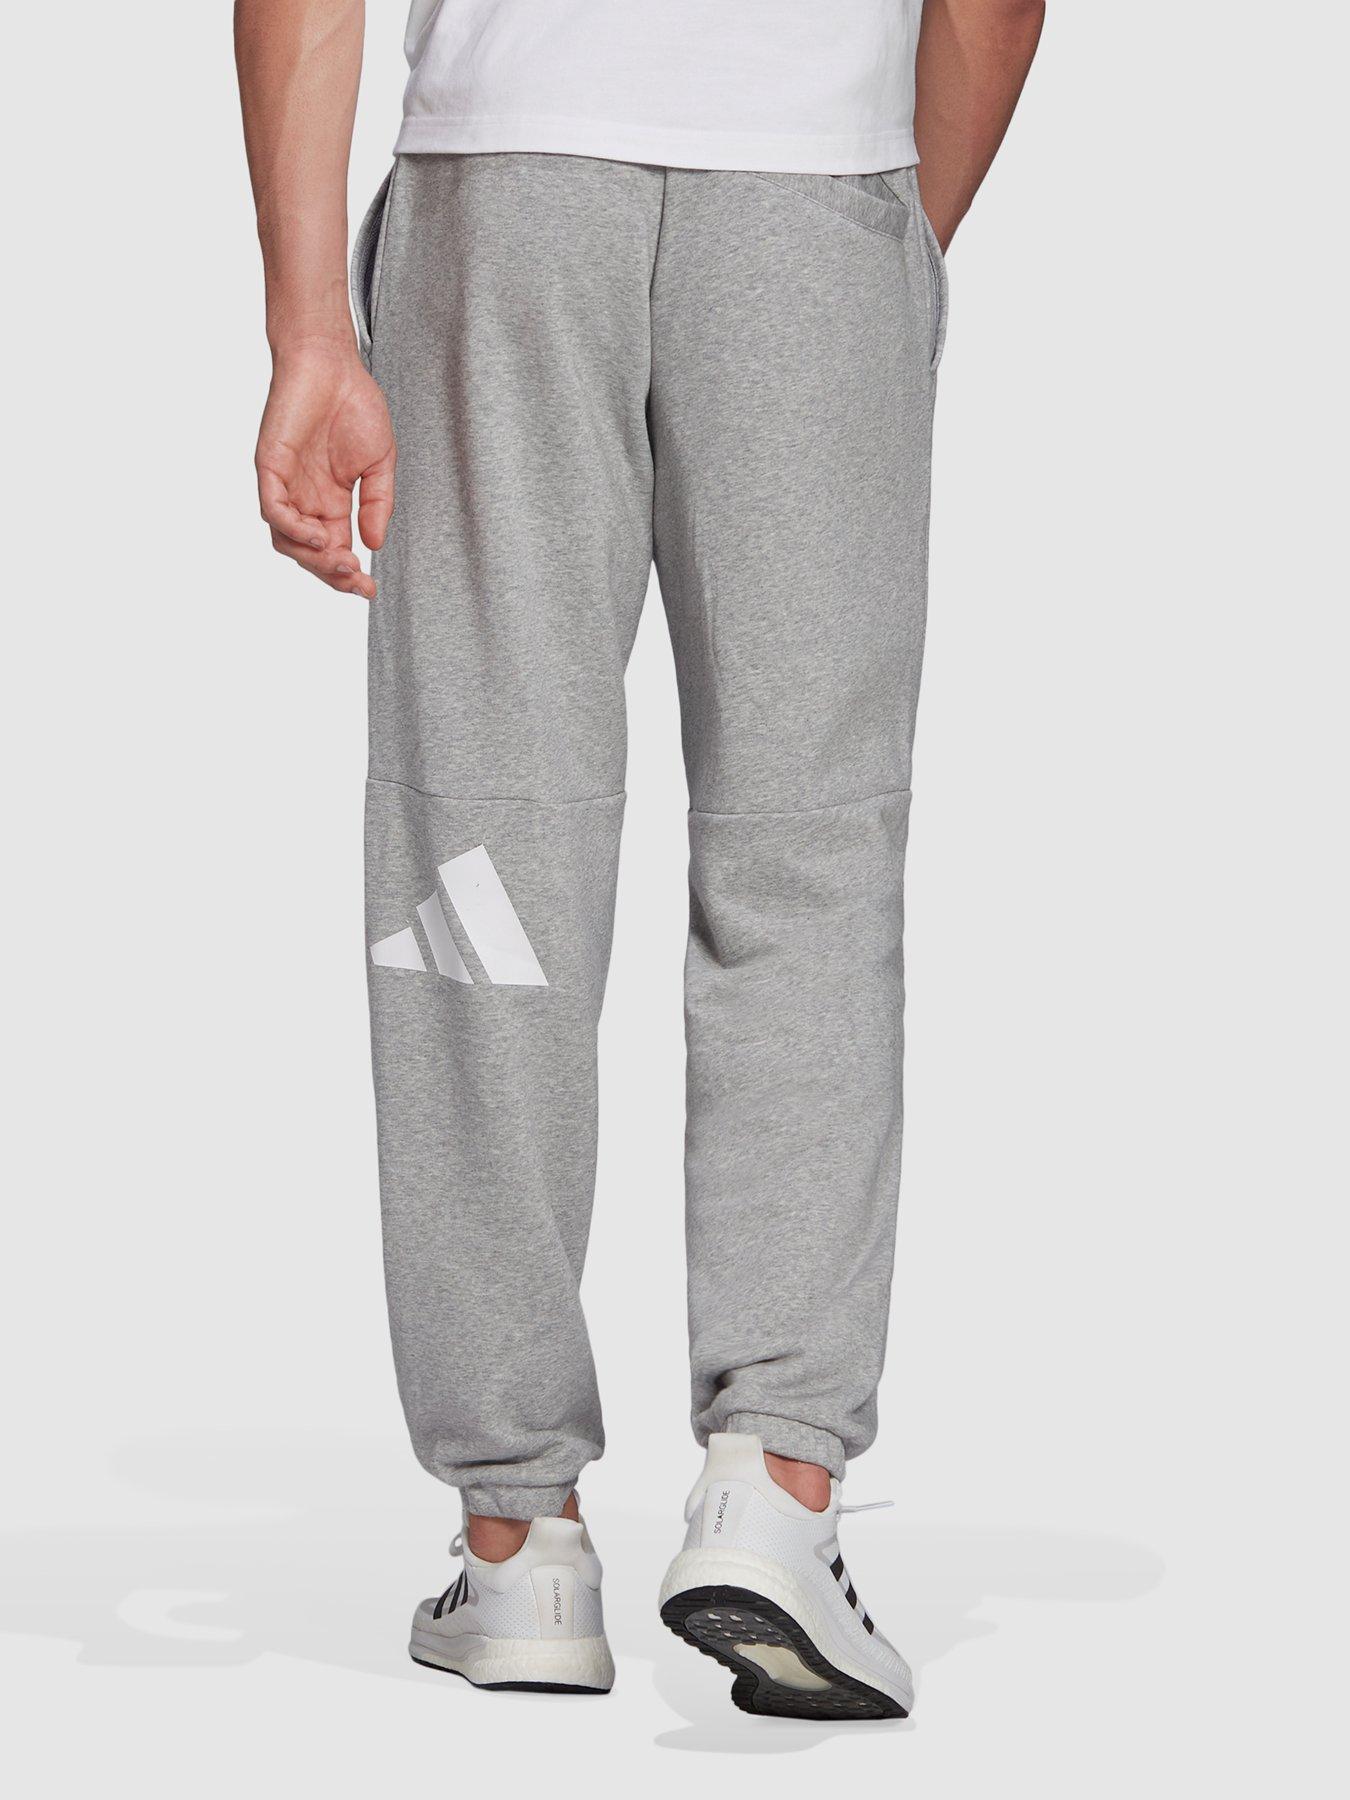  Future Icons Pants (Plus Size) - Medium Grey Heather